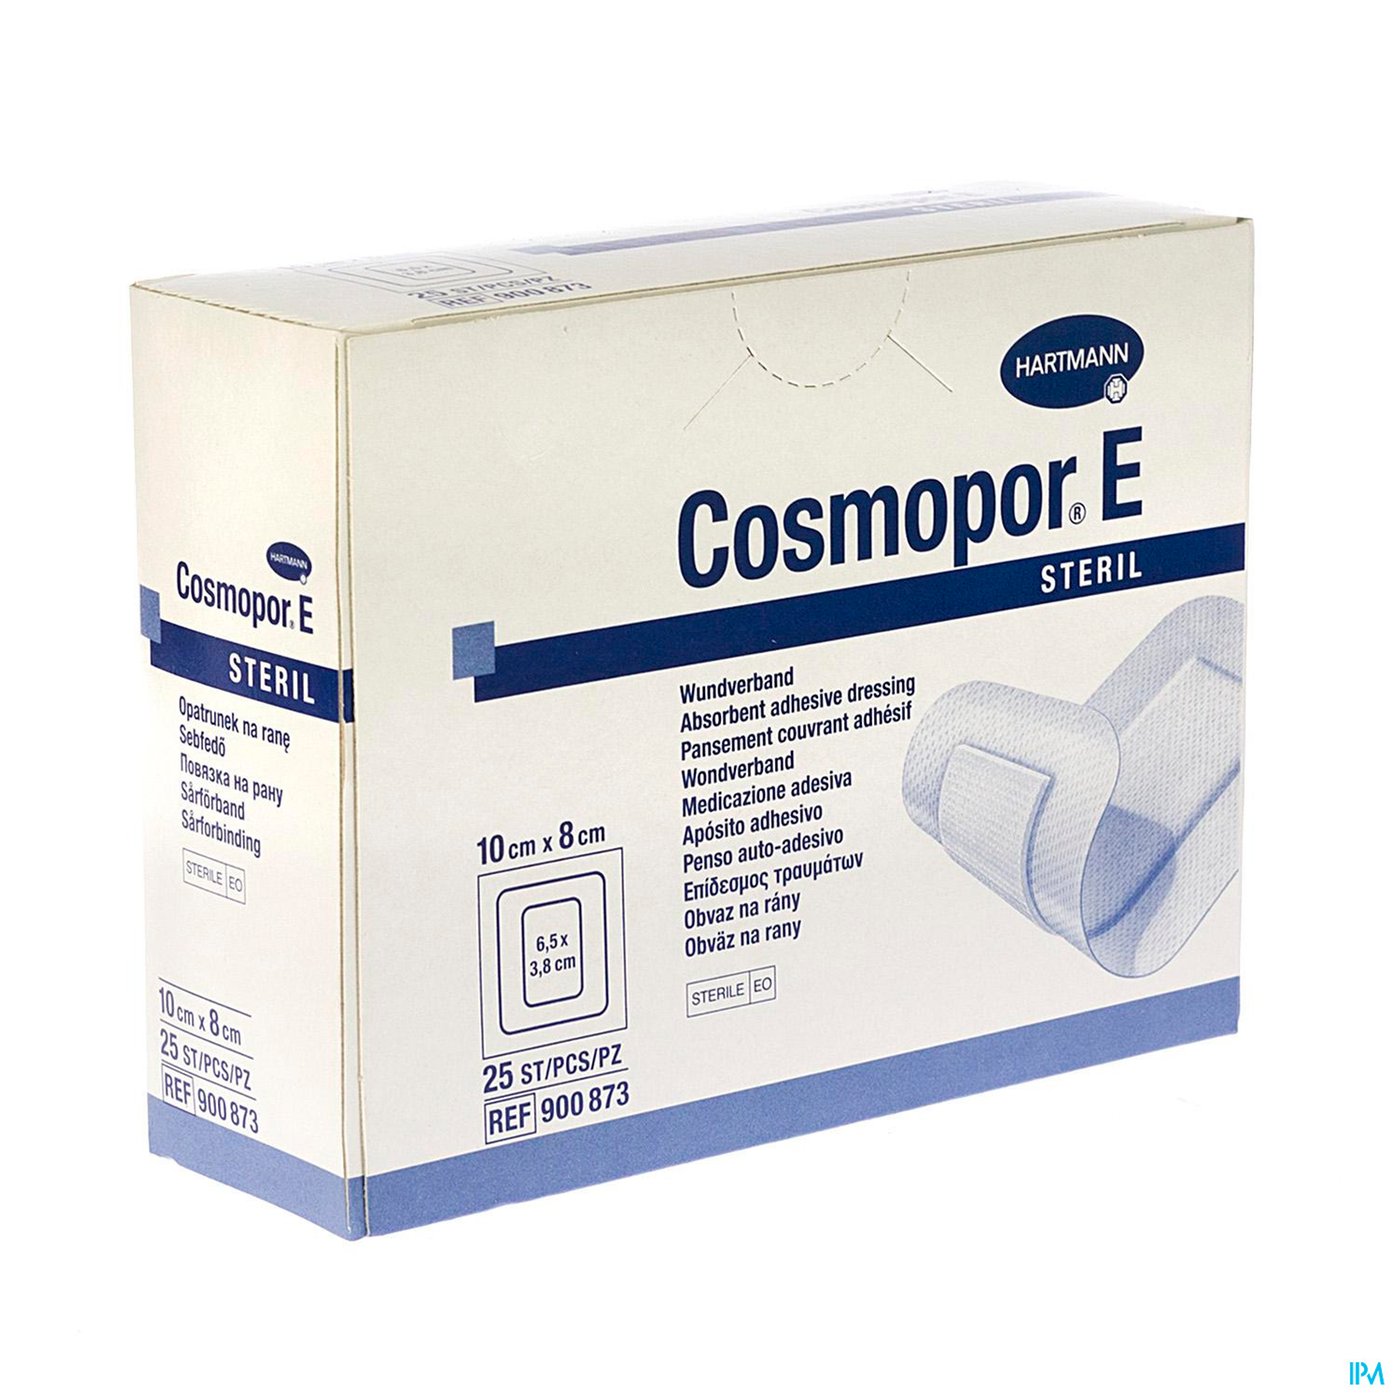 Cosmopor E Latexfree 10x8cm 25 P/s packshot